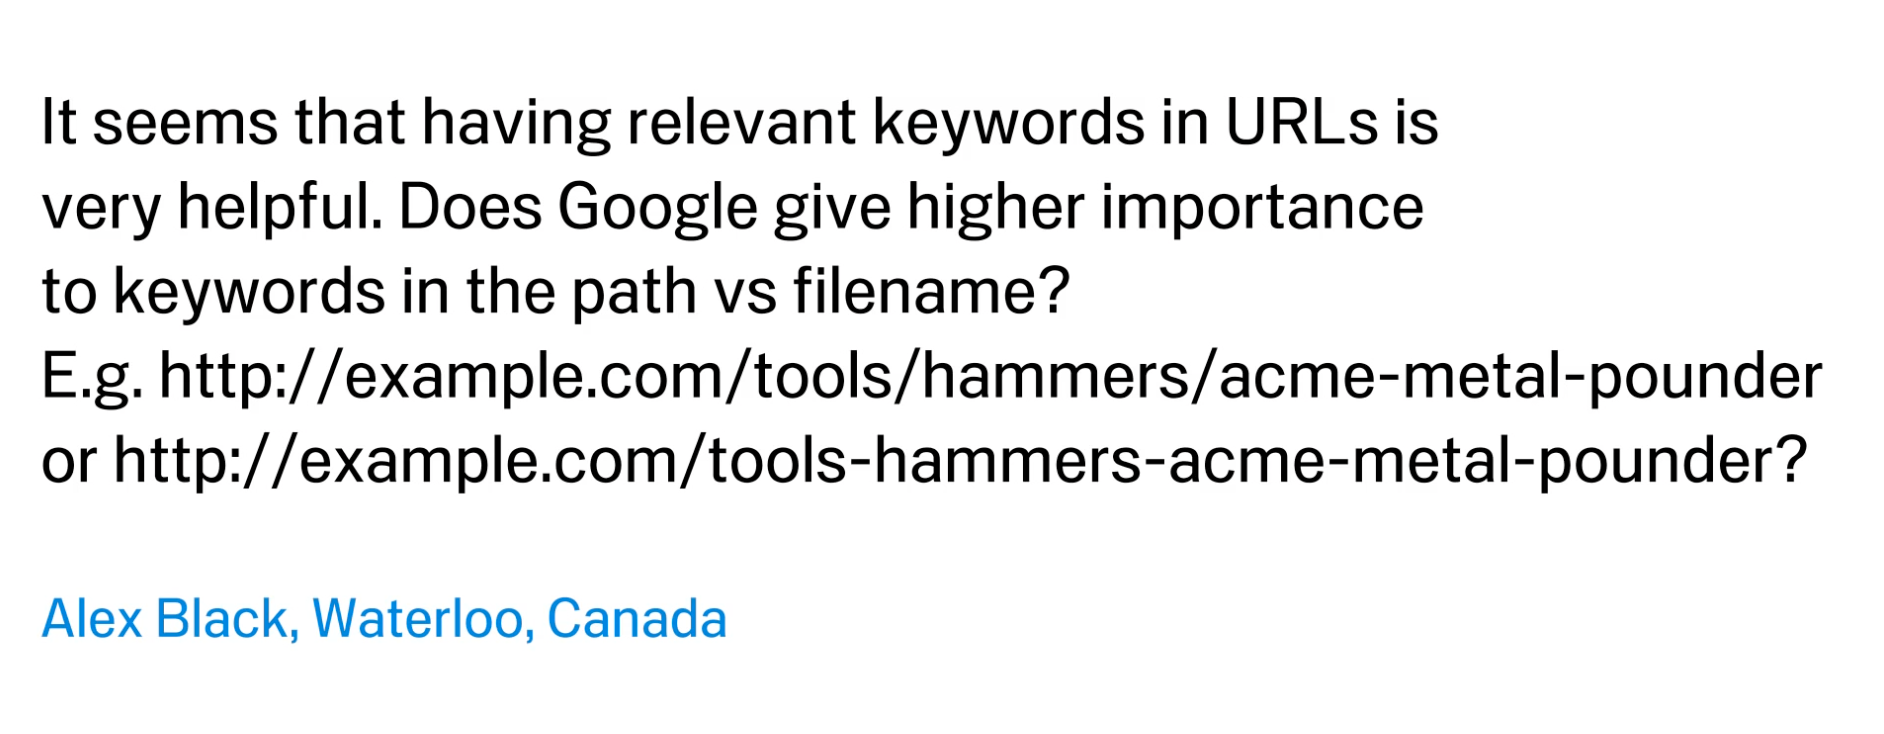 Keywords in the URL path